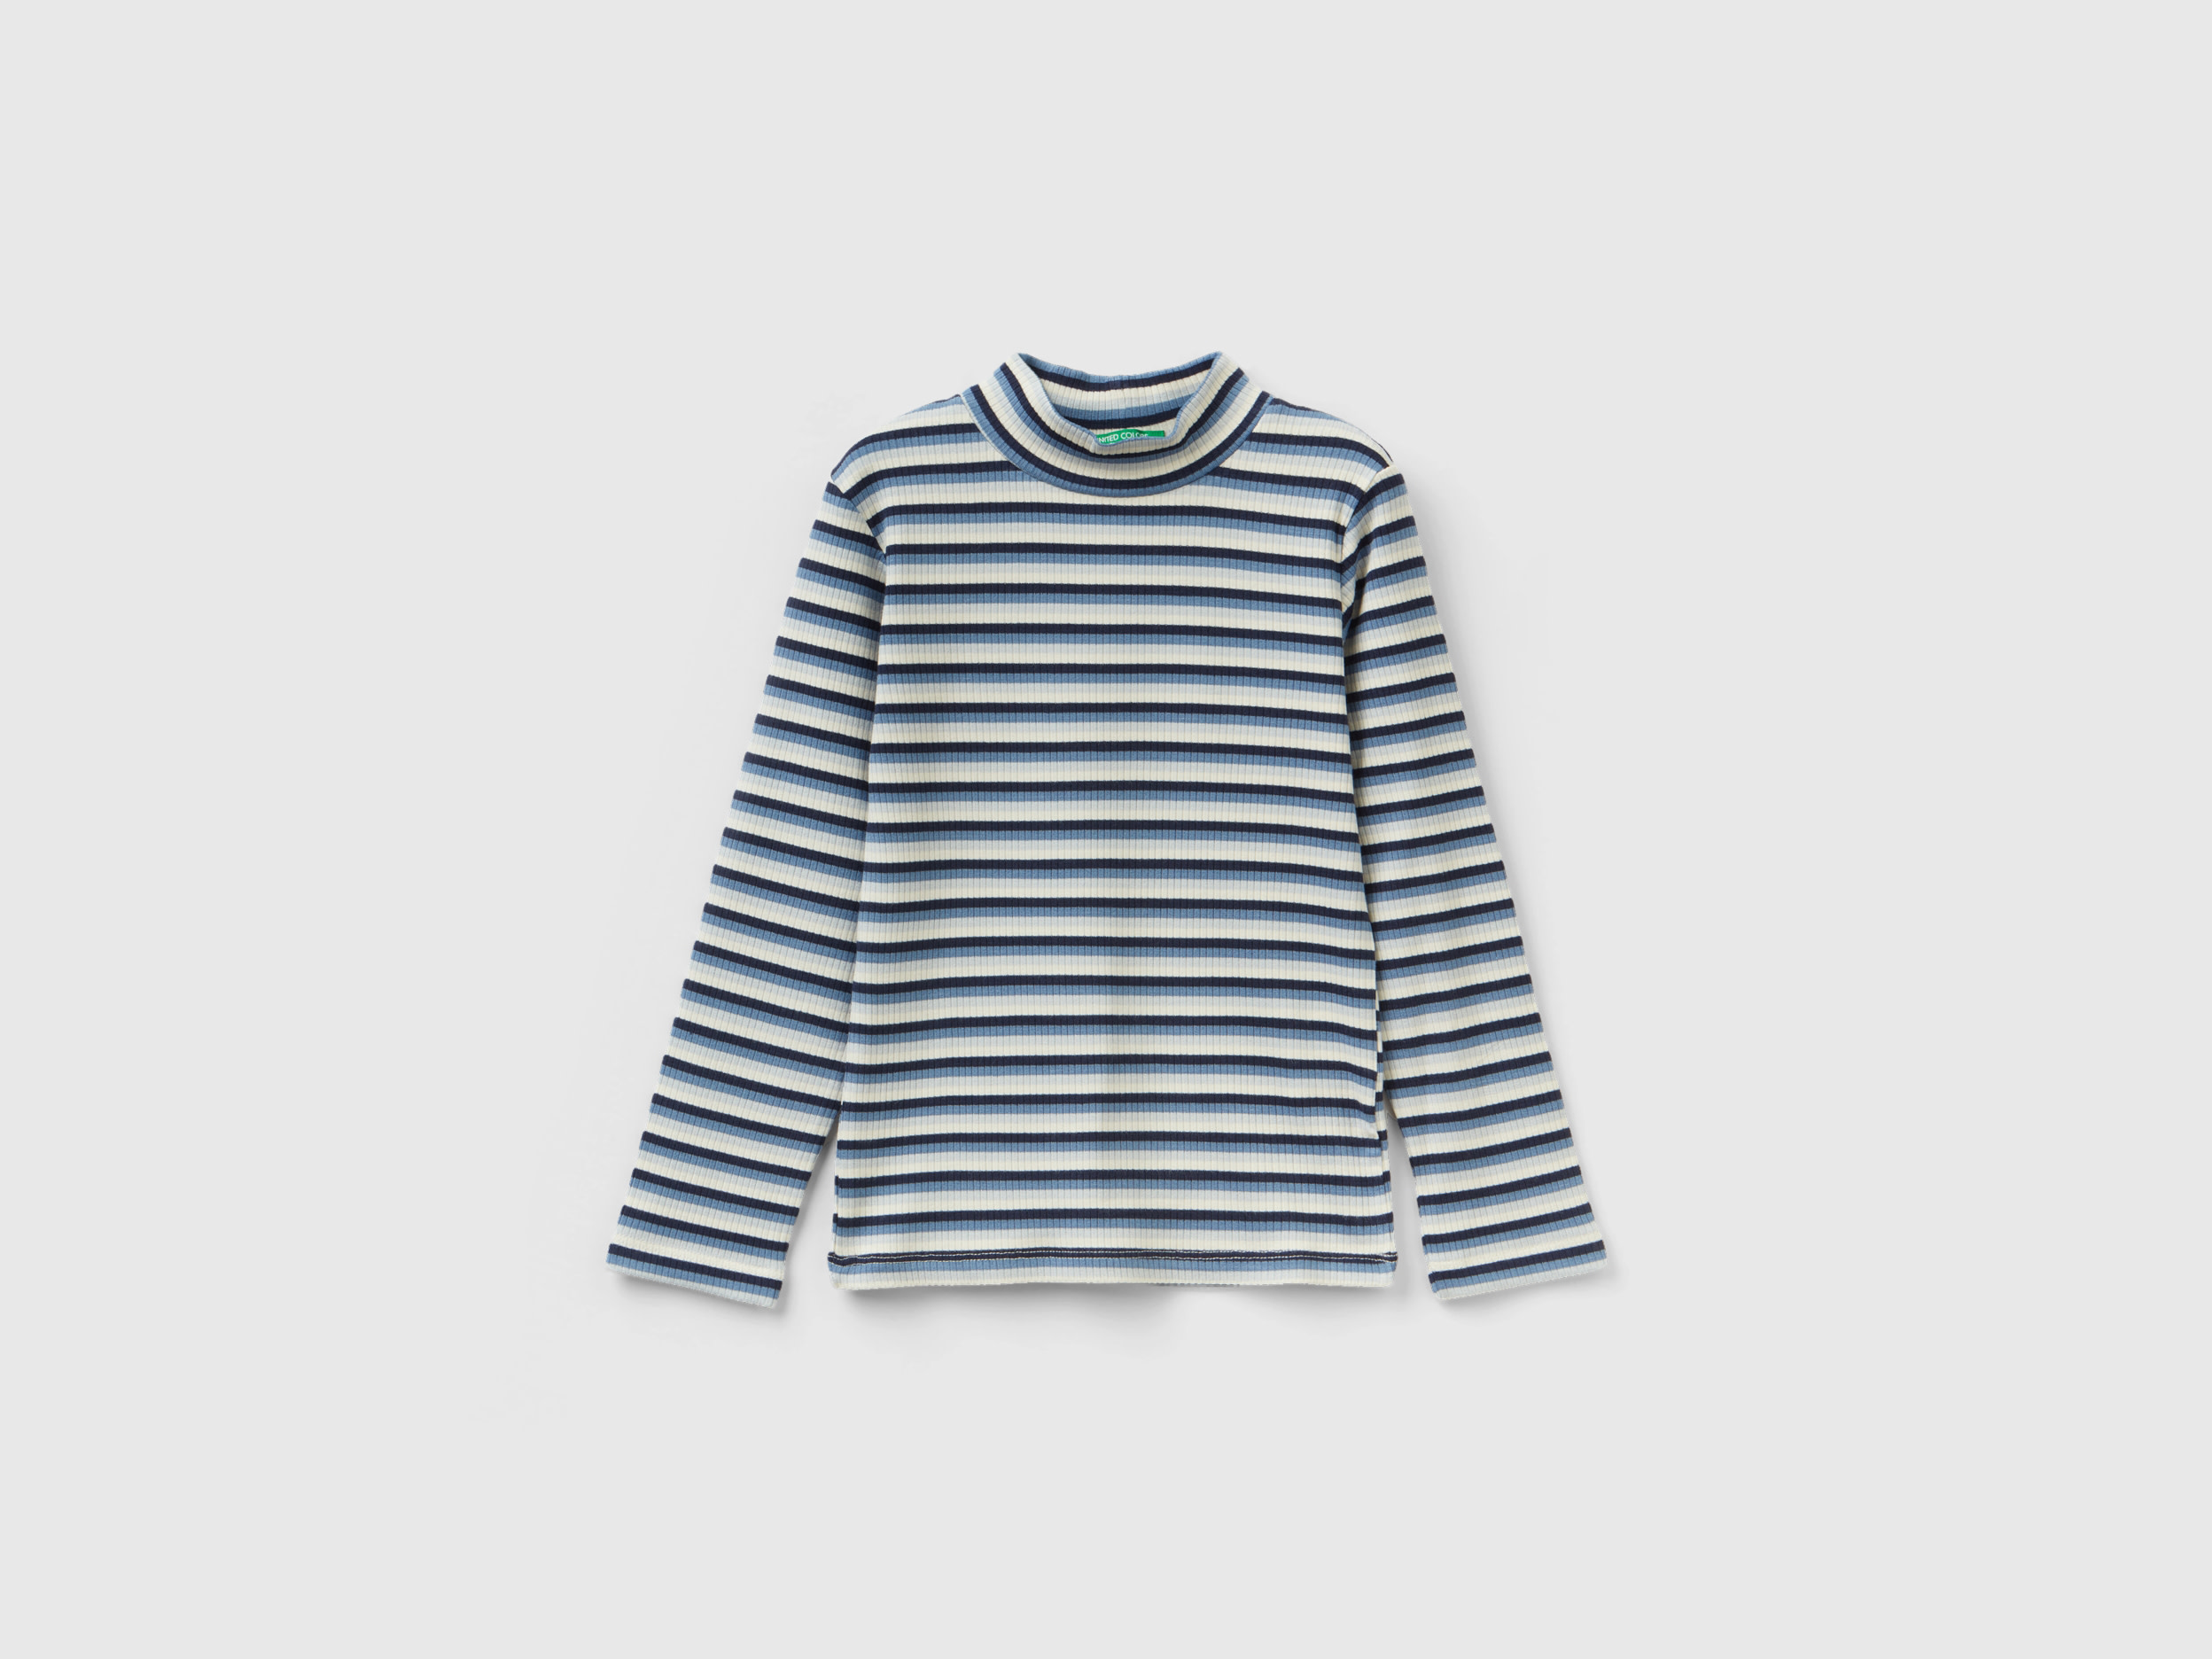 Benetton, Striped Turtleneck T-shirt, size 18-24, Multi-color, Kids